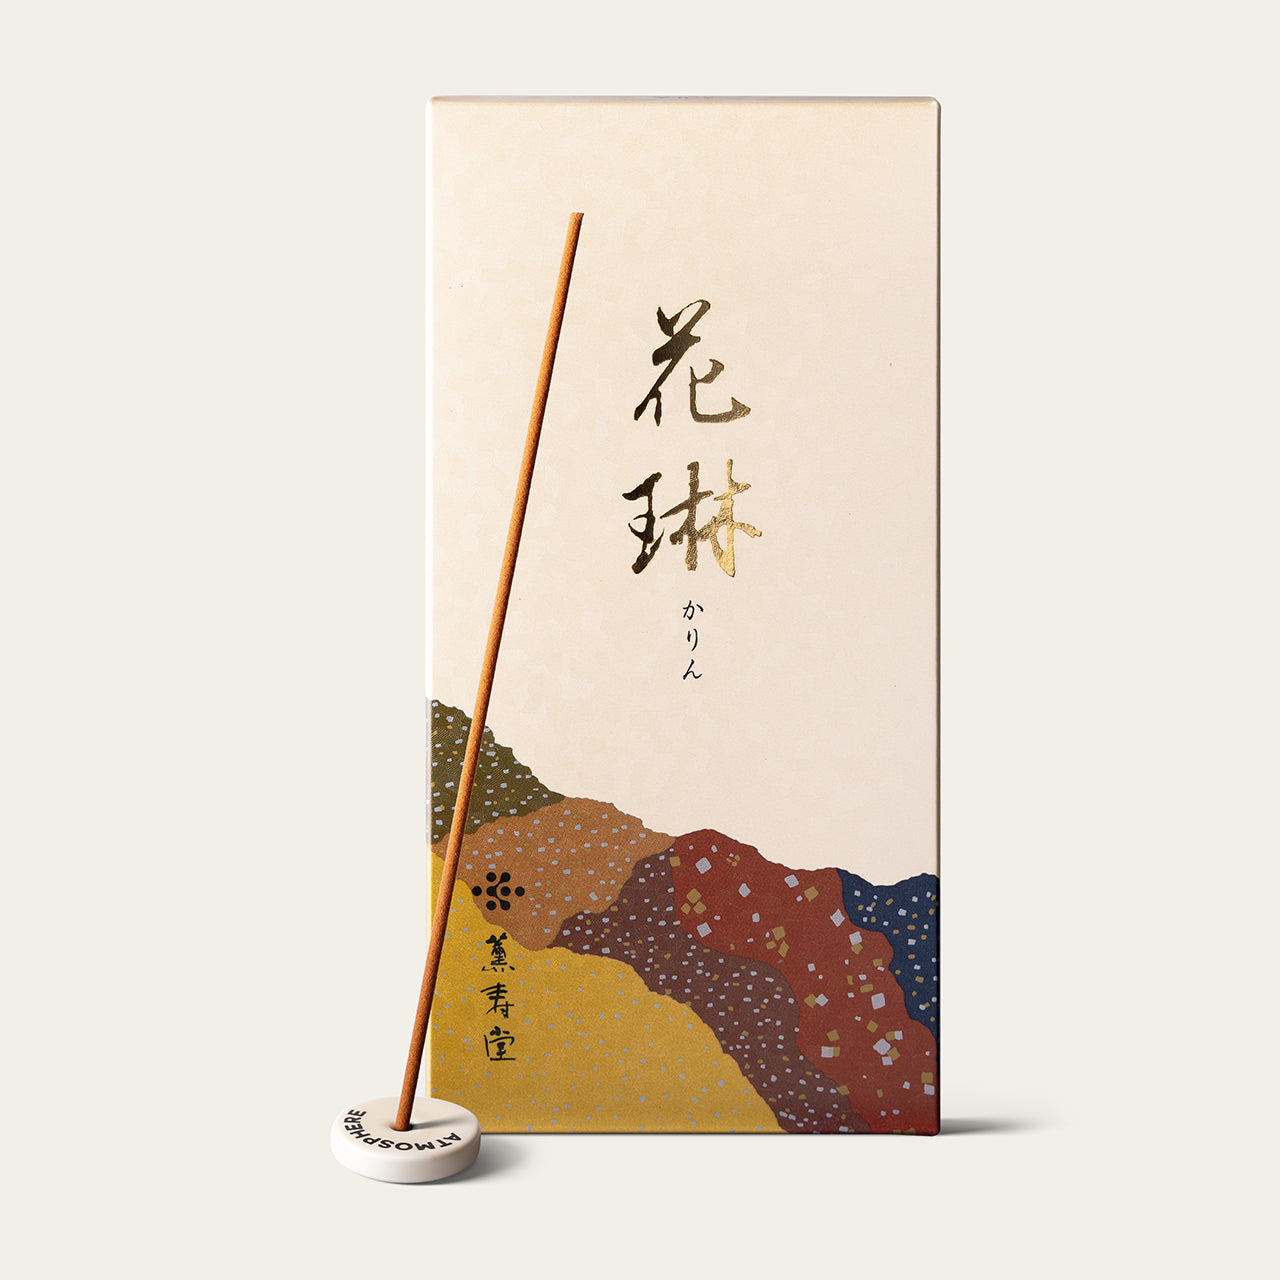 Kunjudo Karin Japanese incense sticks (220 sticks) with Atmosphere ceramic incense holder